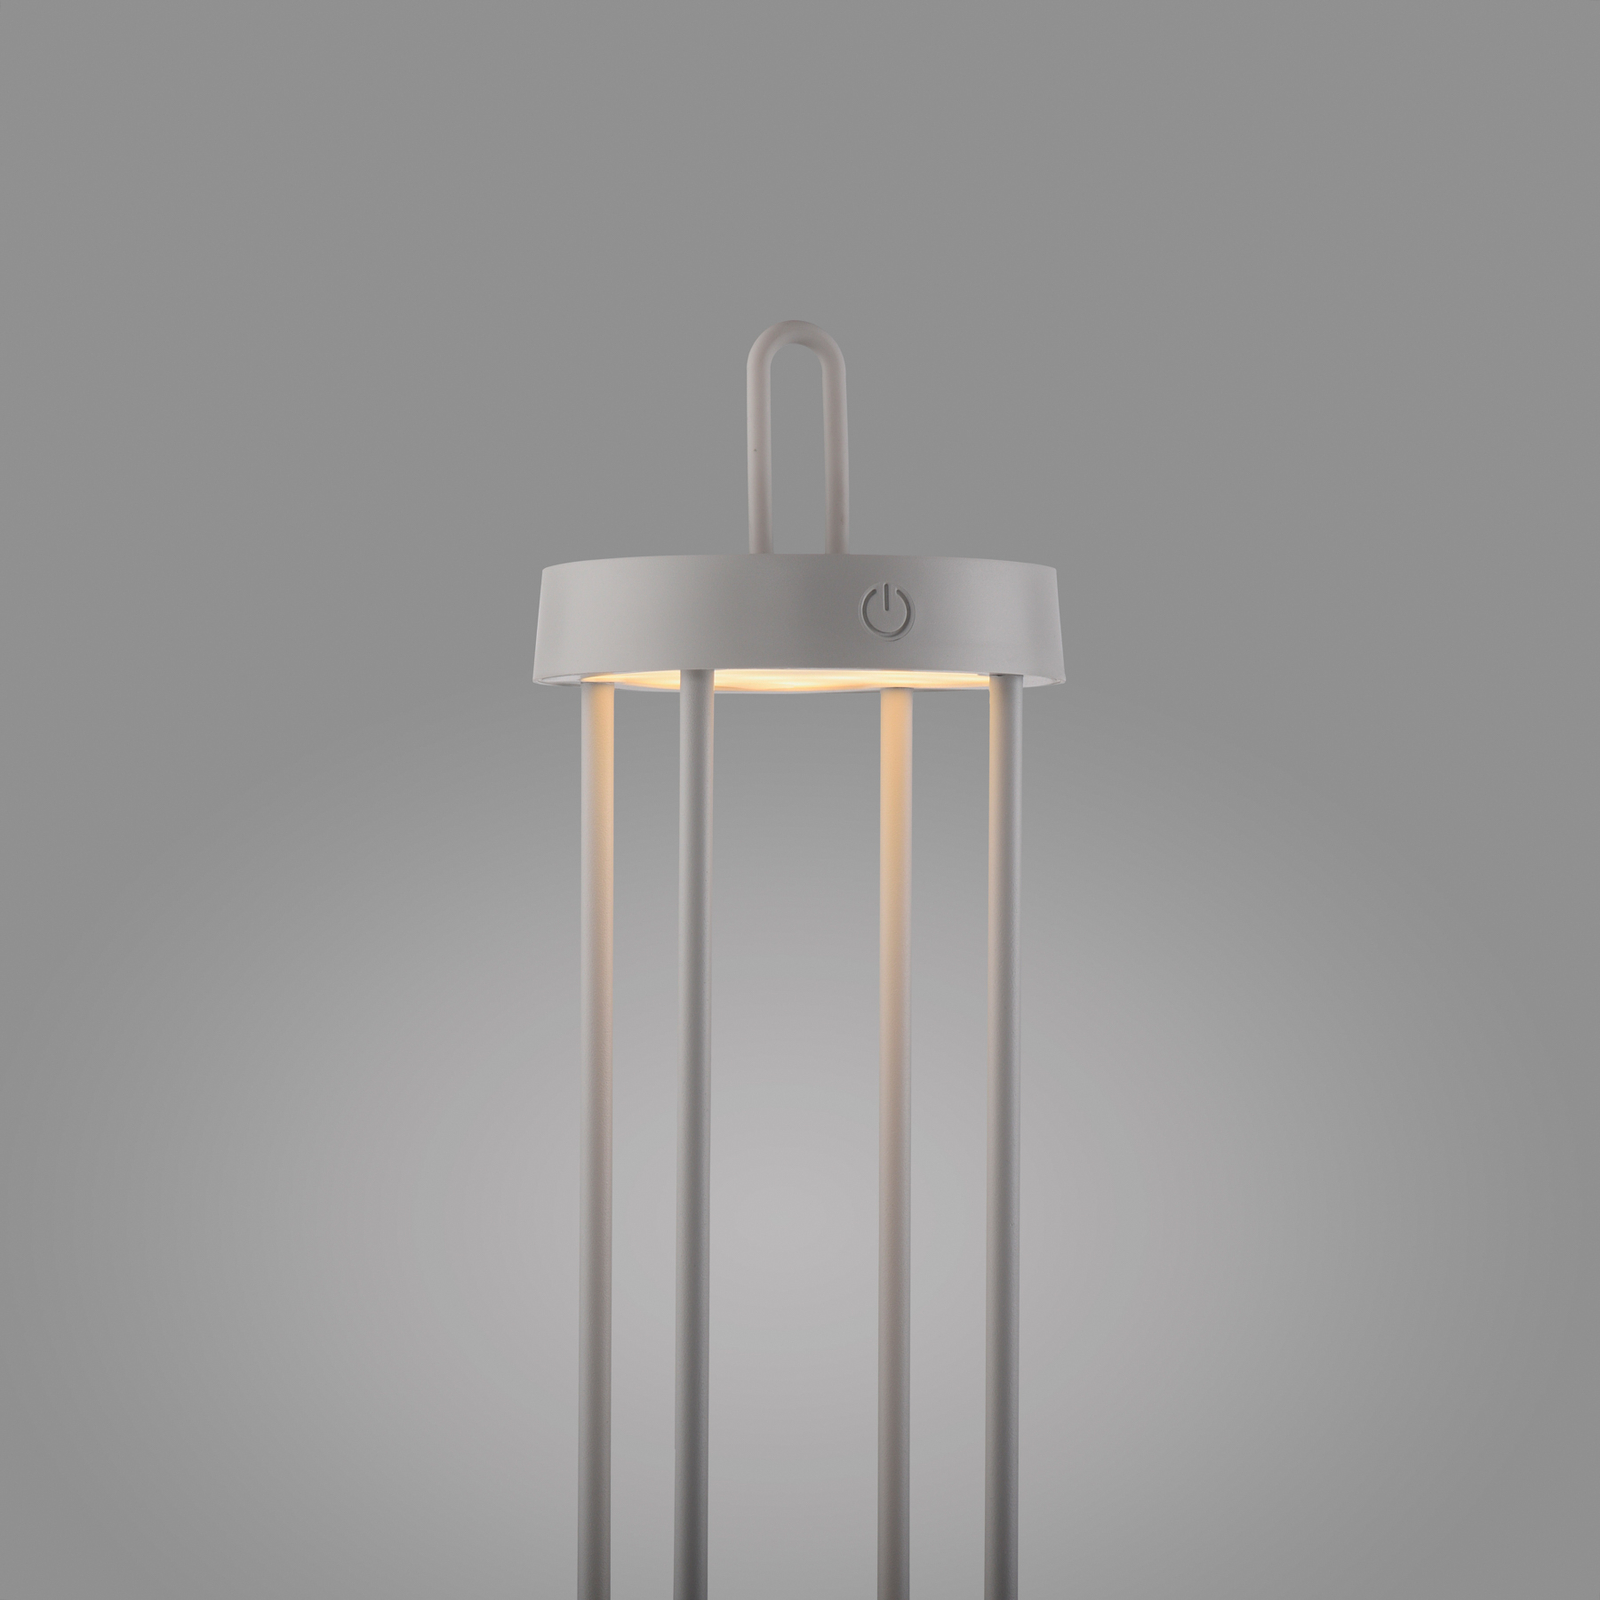 JUST LIGHT. LED table lamp Anselm grey-beige 50cm iron